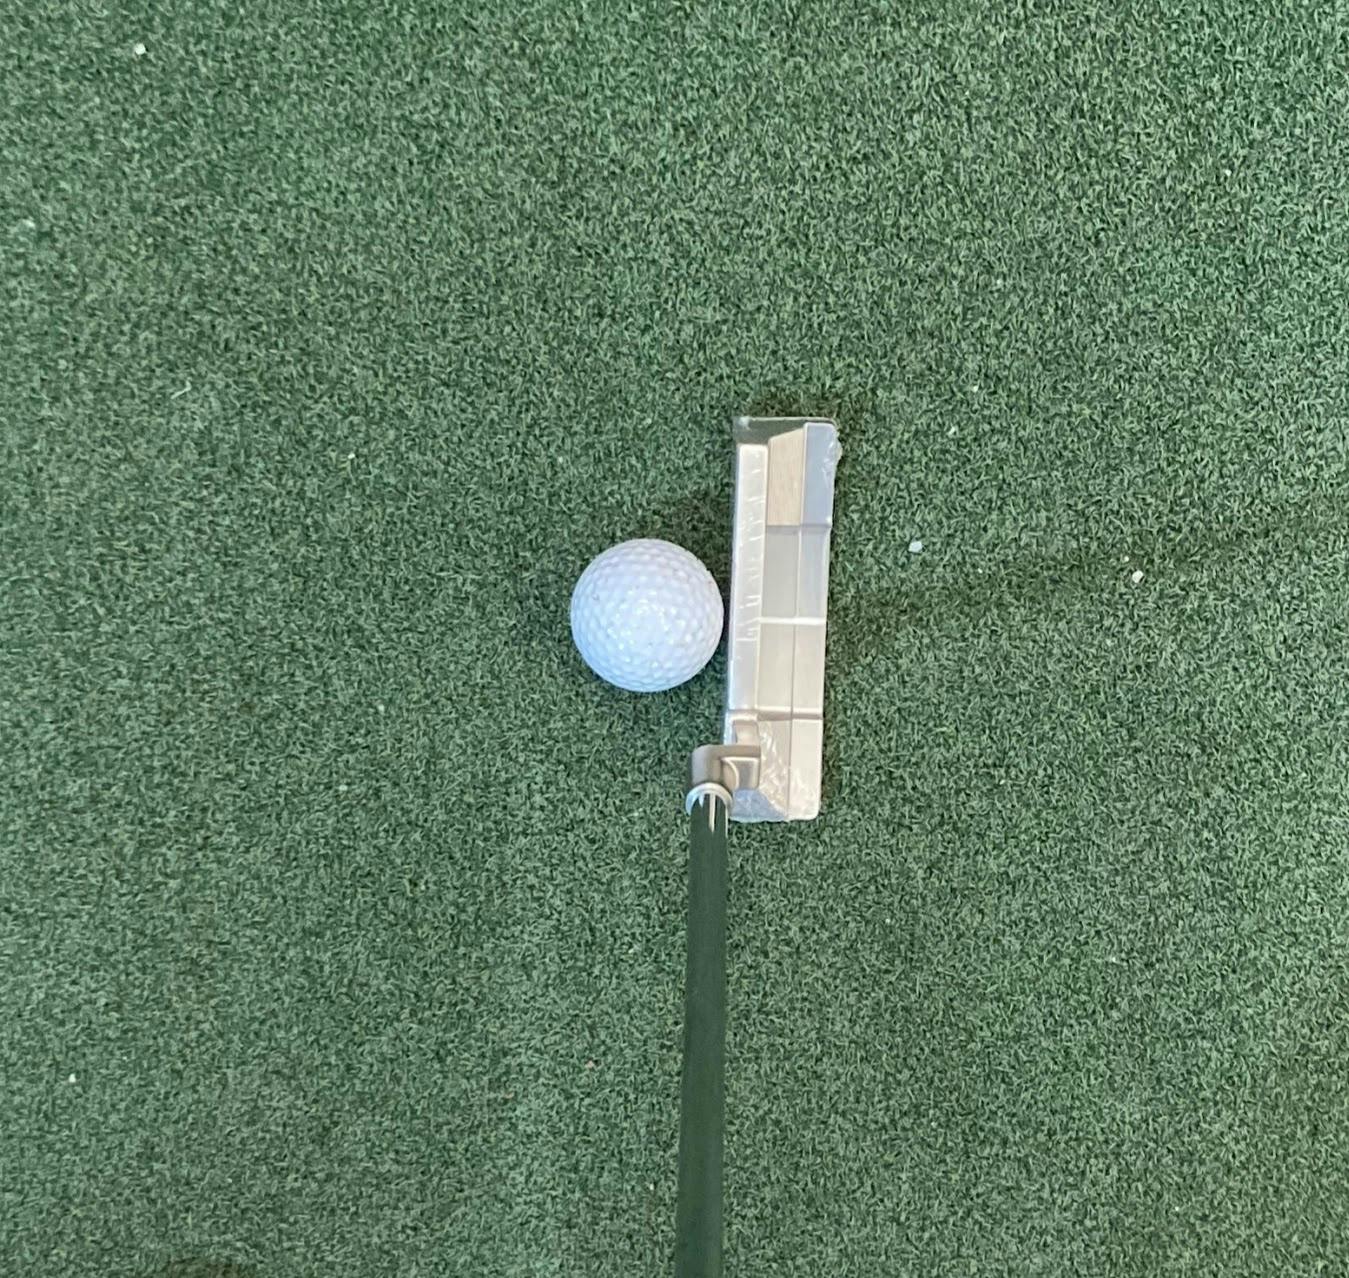 In Shape Golf Game + 1 Putter